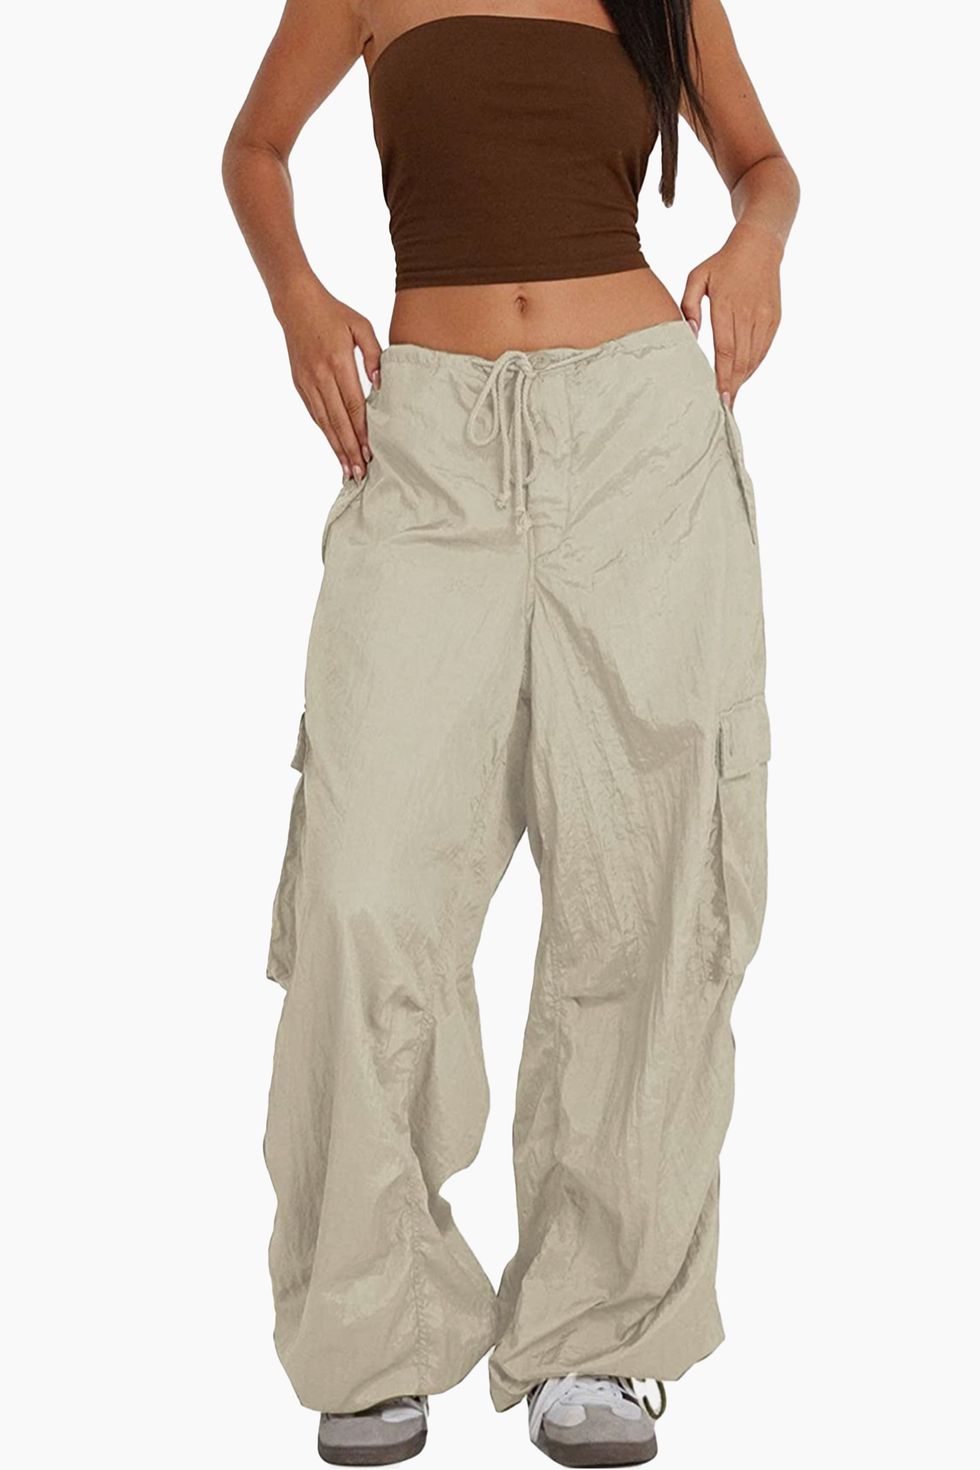 Parachute Pants Y2K Streetwear Baggy Cargo Trousers Female Jogging